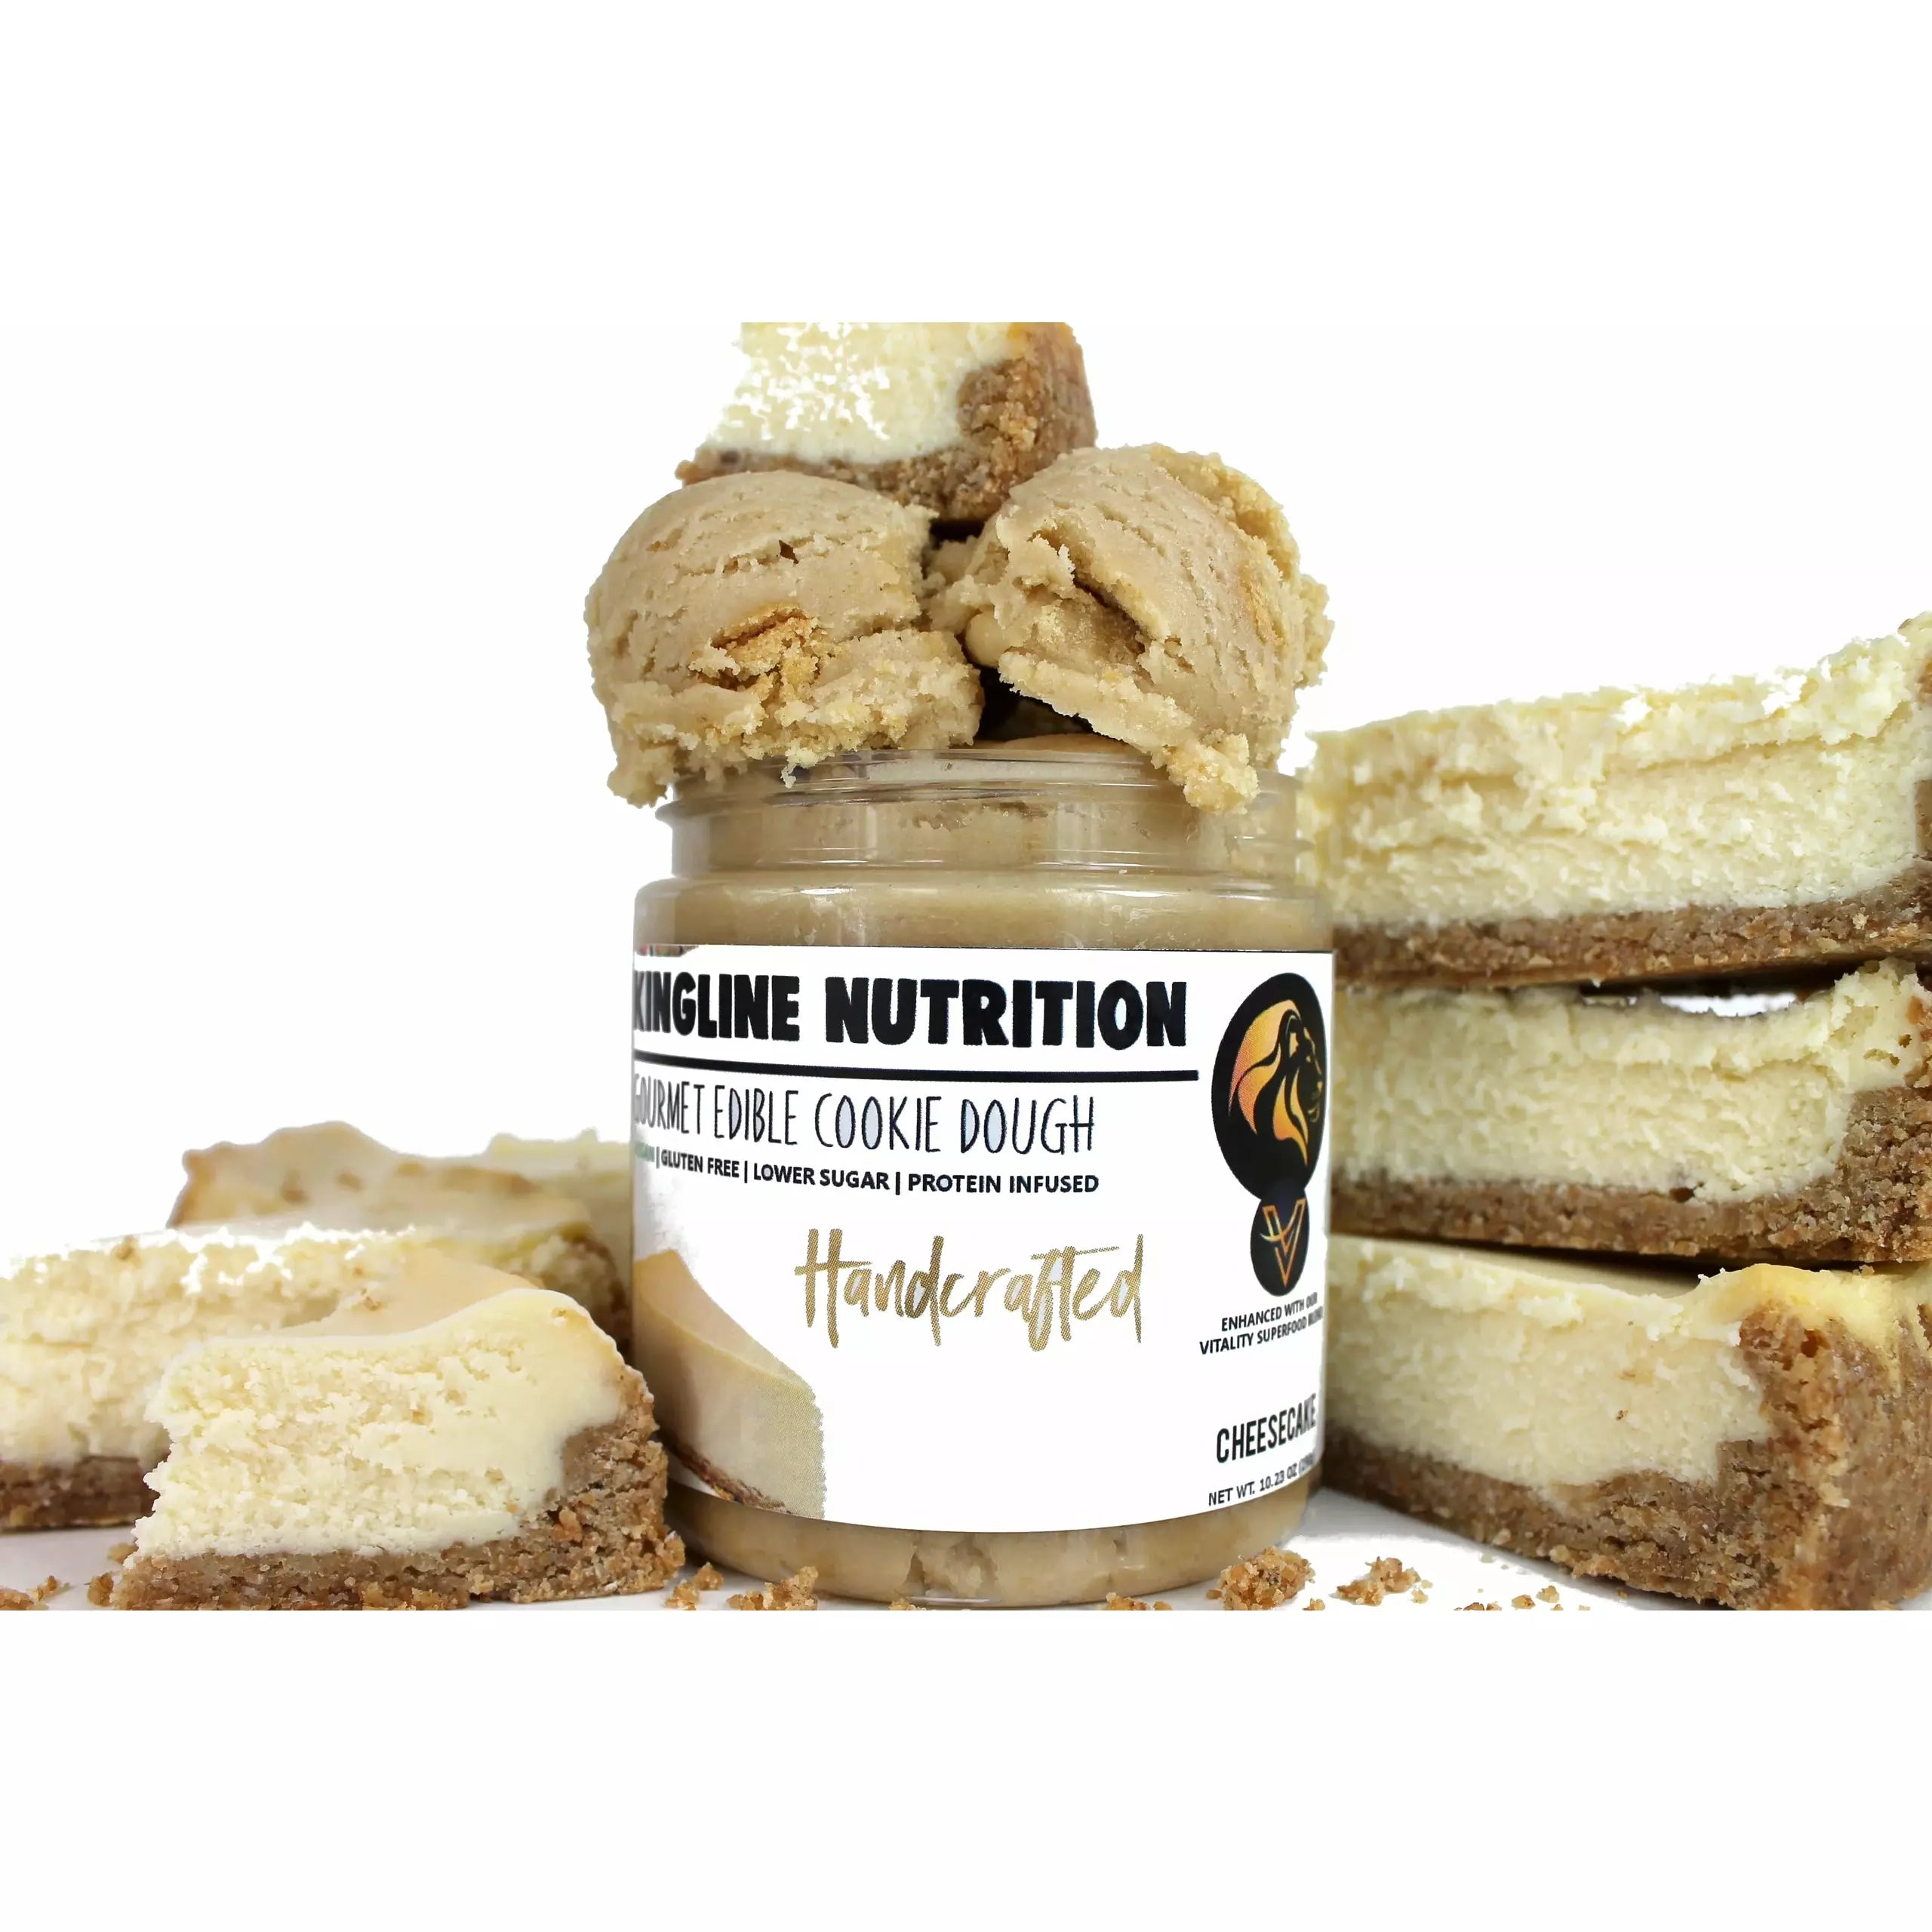 Kingline Nutrition VEGAN Edible Protein Cookie Dough (10 oz jar) Protein Snacks Classic Cheesecake Kingline Nutition